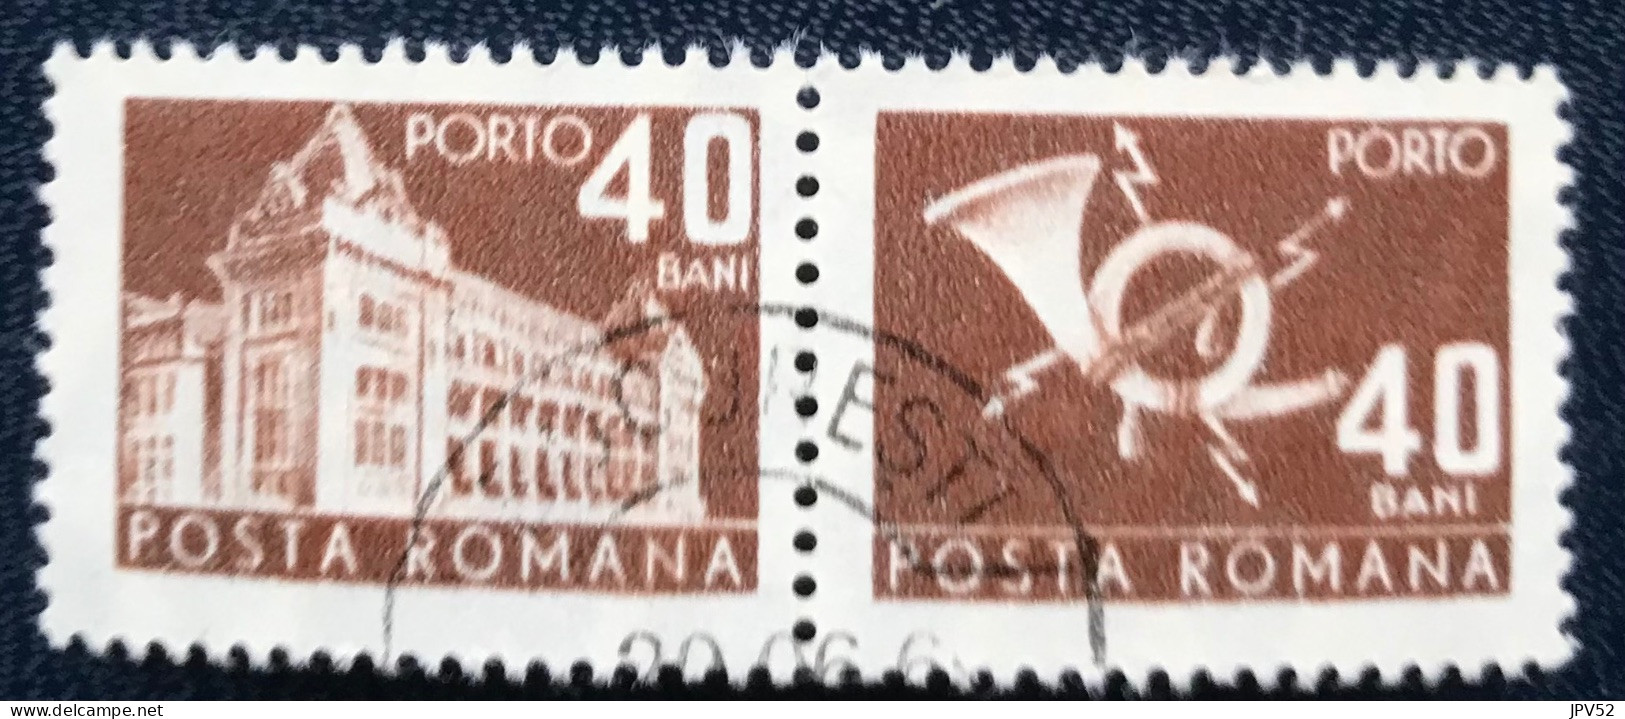 Romana - Roemenië - C14/54 - 1967 - (°)used - Michel 111 - Postkantoor & Posthoorn & Bliksem - Portomarken